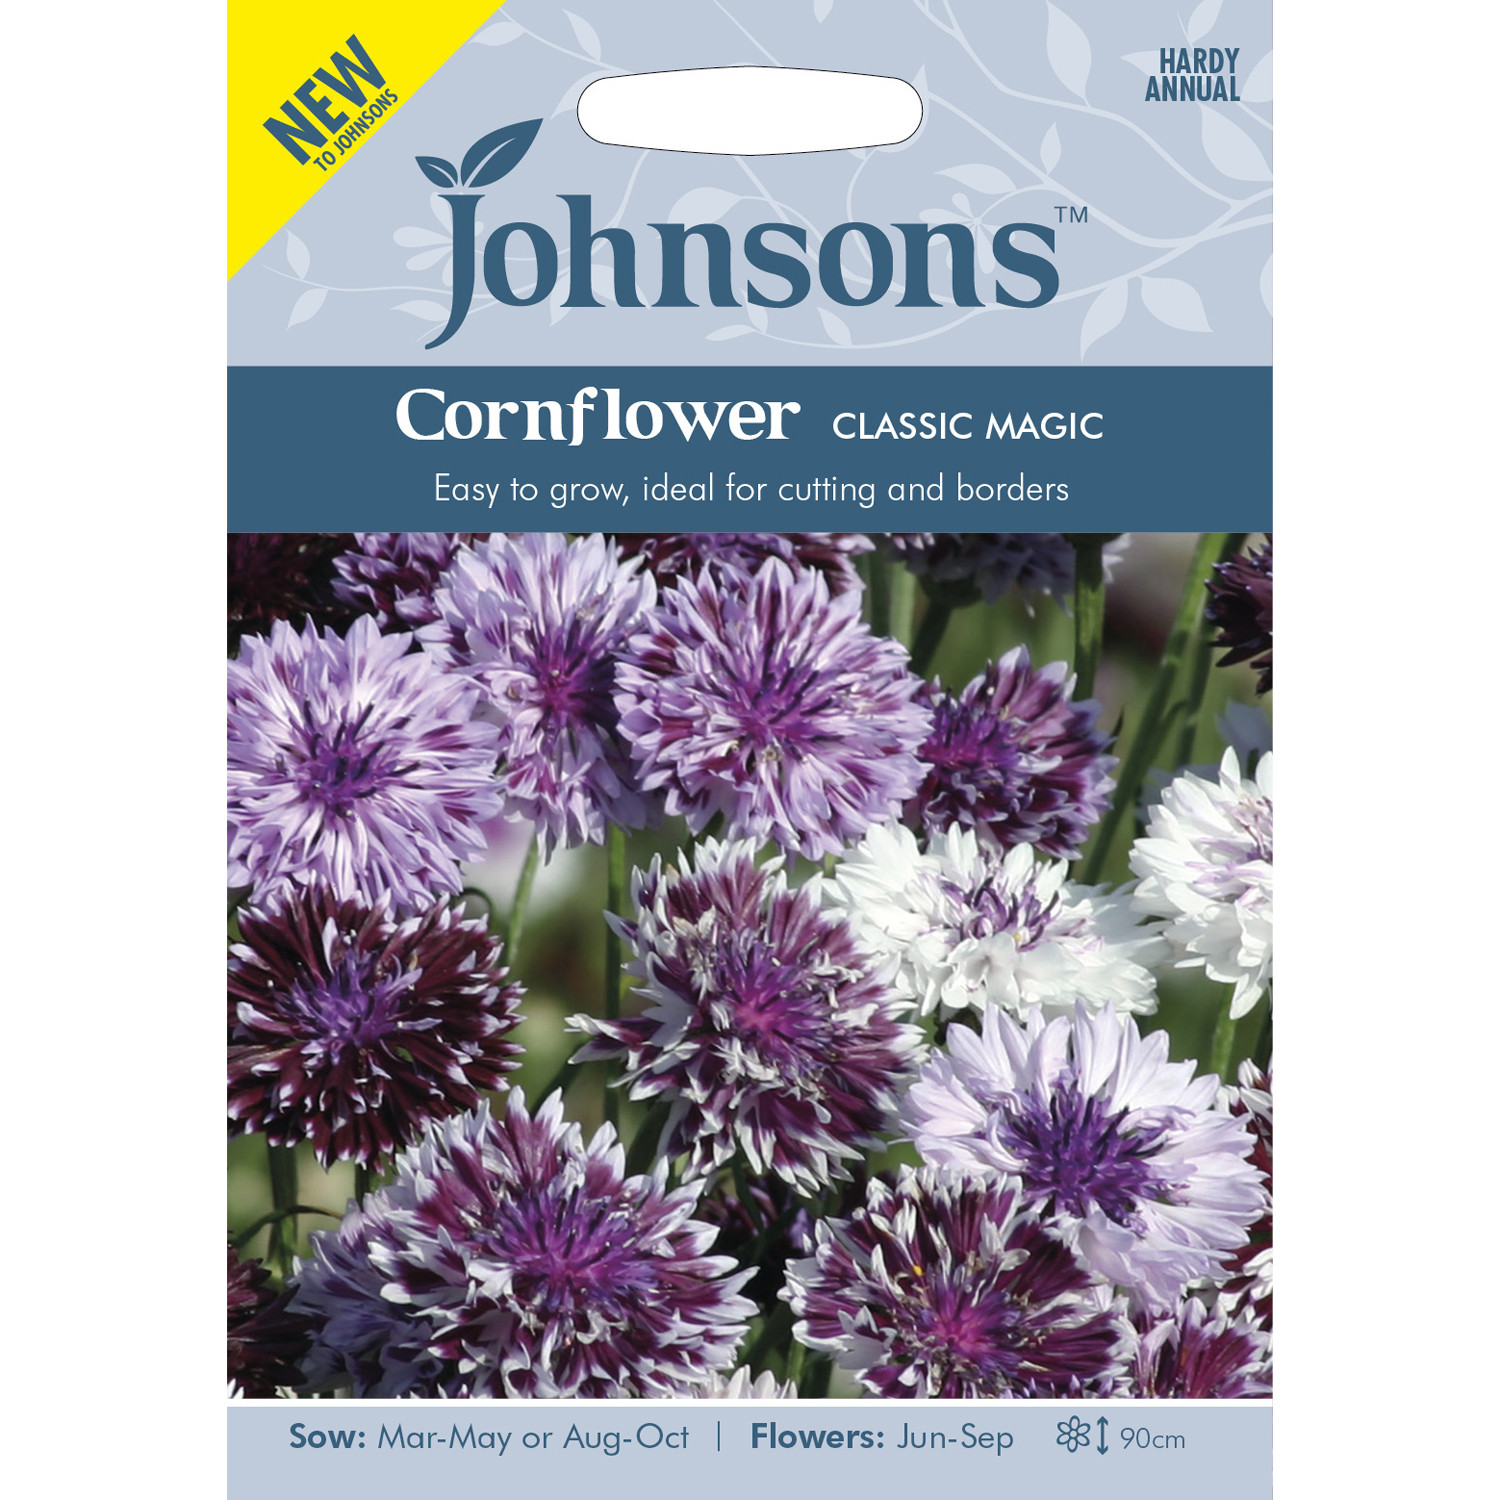 Johnsons Cornflower Flower Seeds Image 2